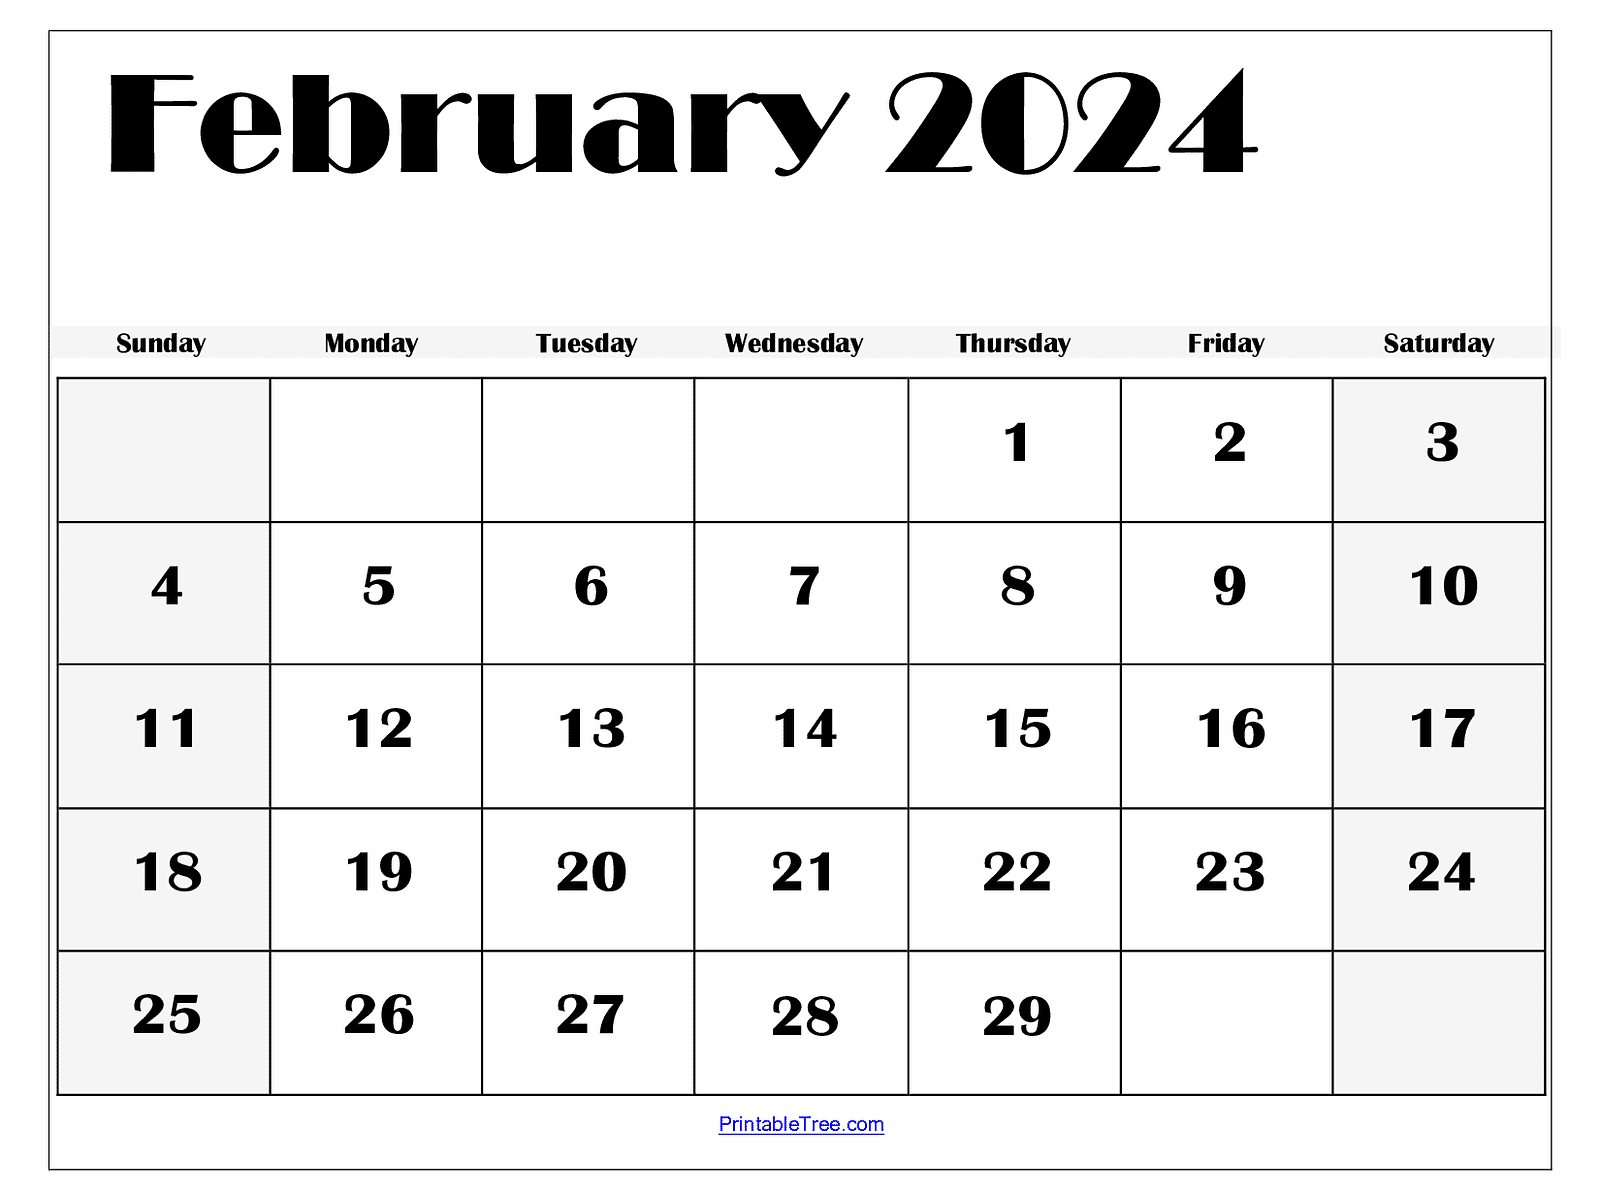 Single Page Calendar Printable 2024 by printabletree01 on Dribbble